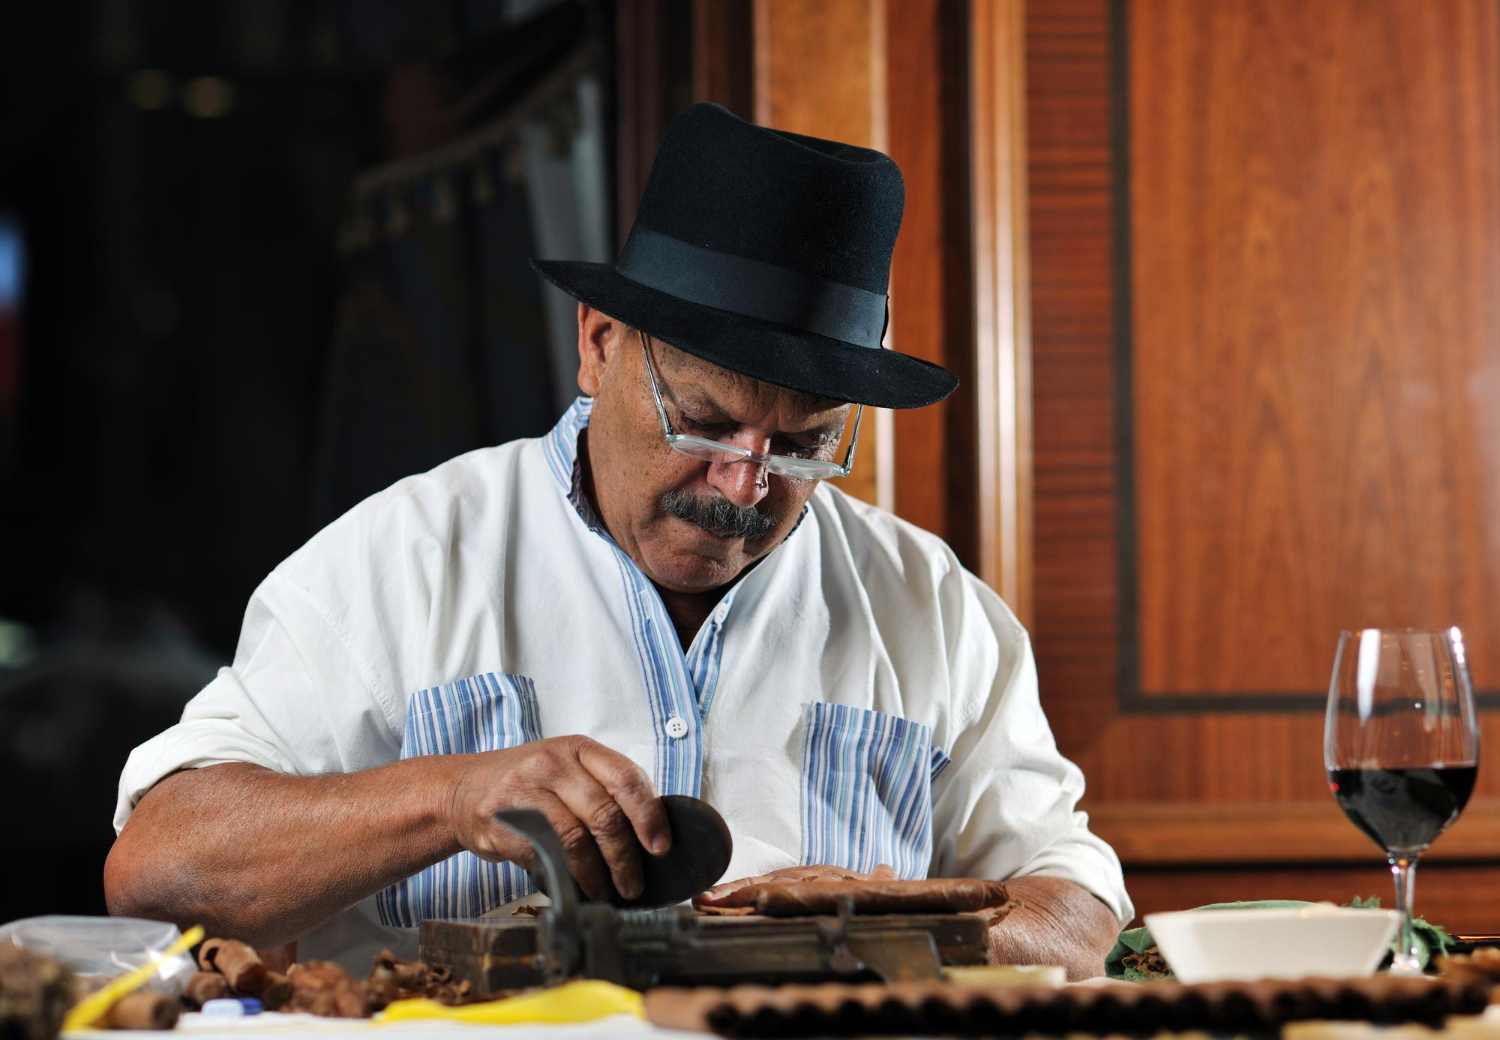 Premium hand-made quality Cuban cigars